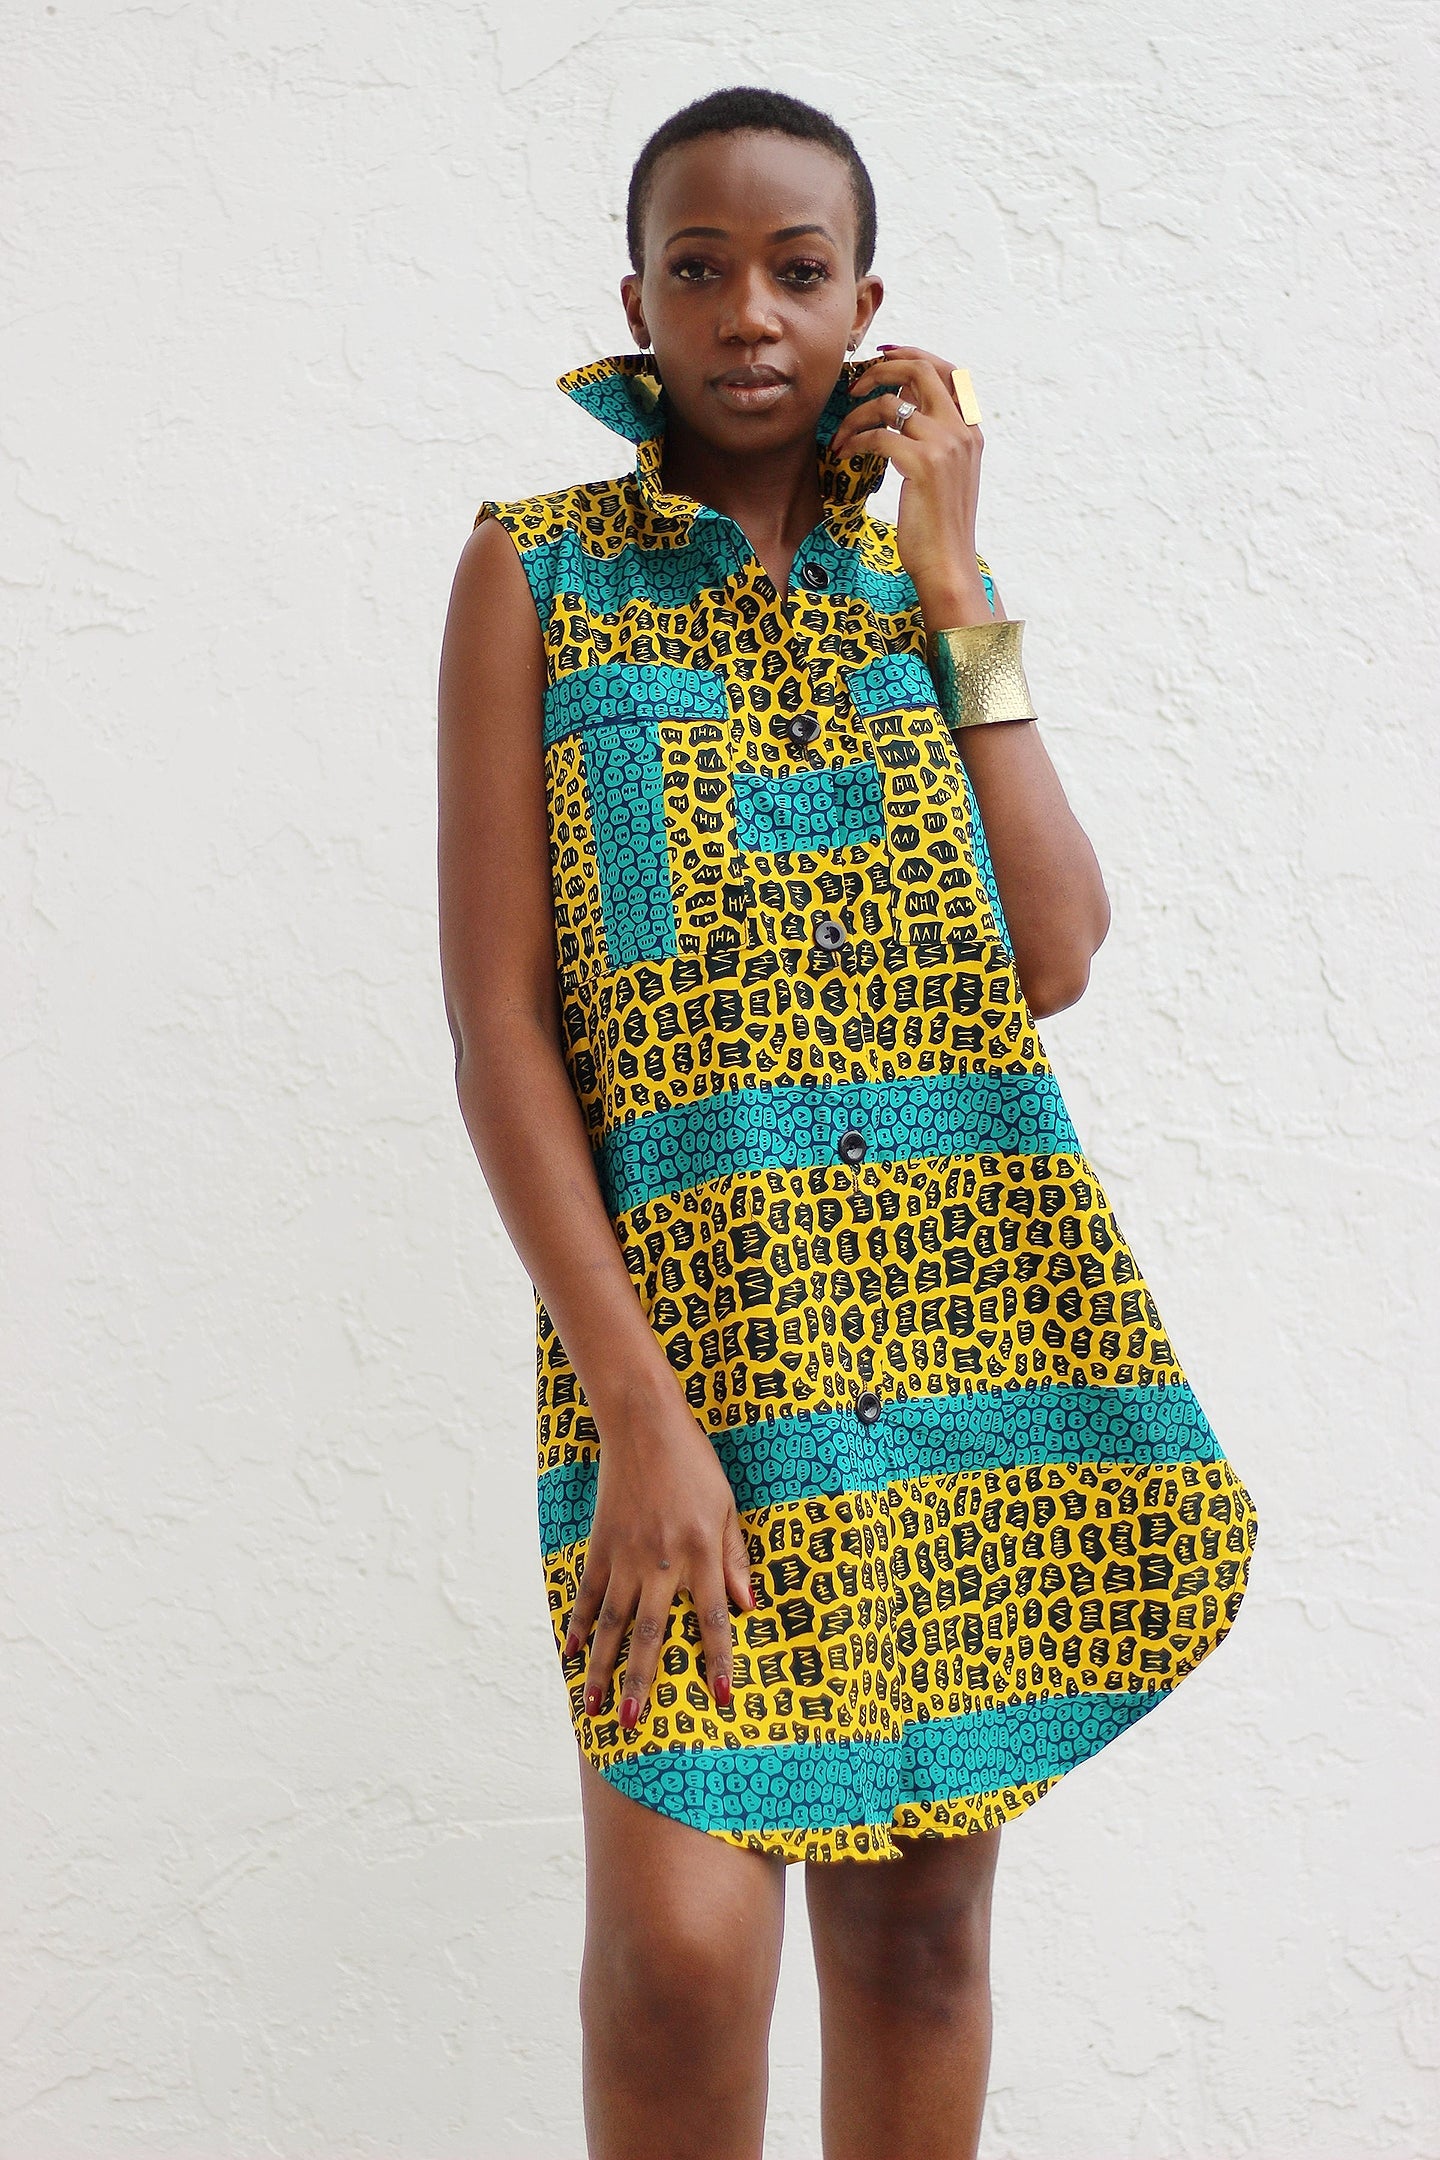 African Print /Ankara /Kitenge Zao Dress Top - Green/Black/Mustard Yellow Animal Print Print - Africas Closet